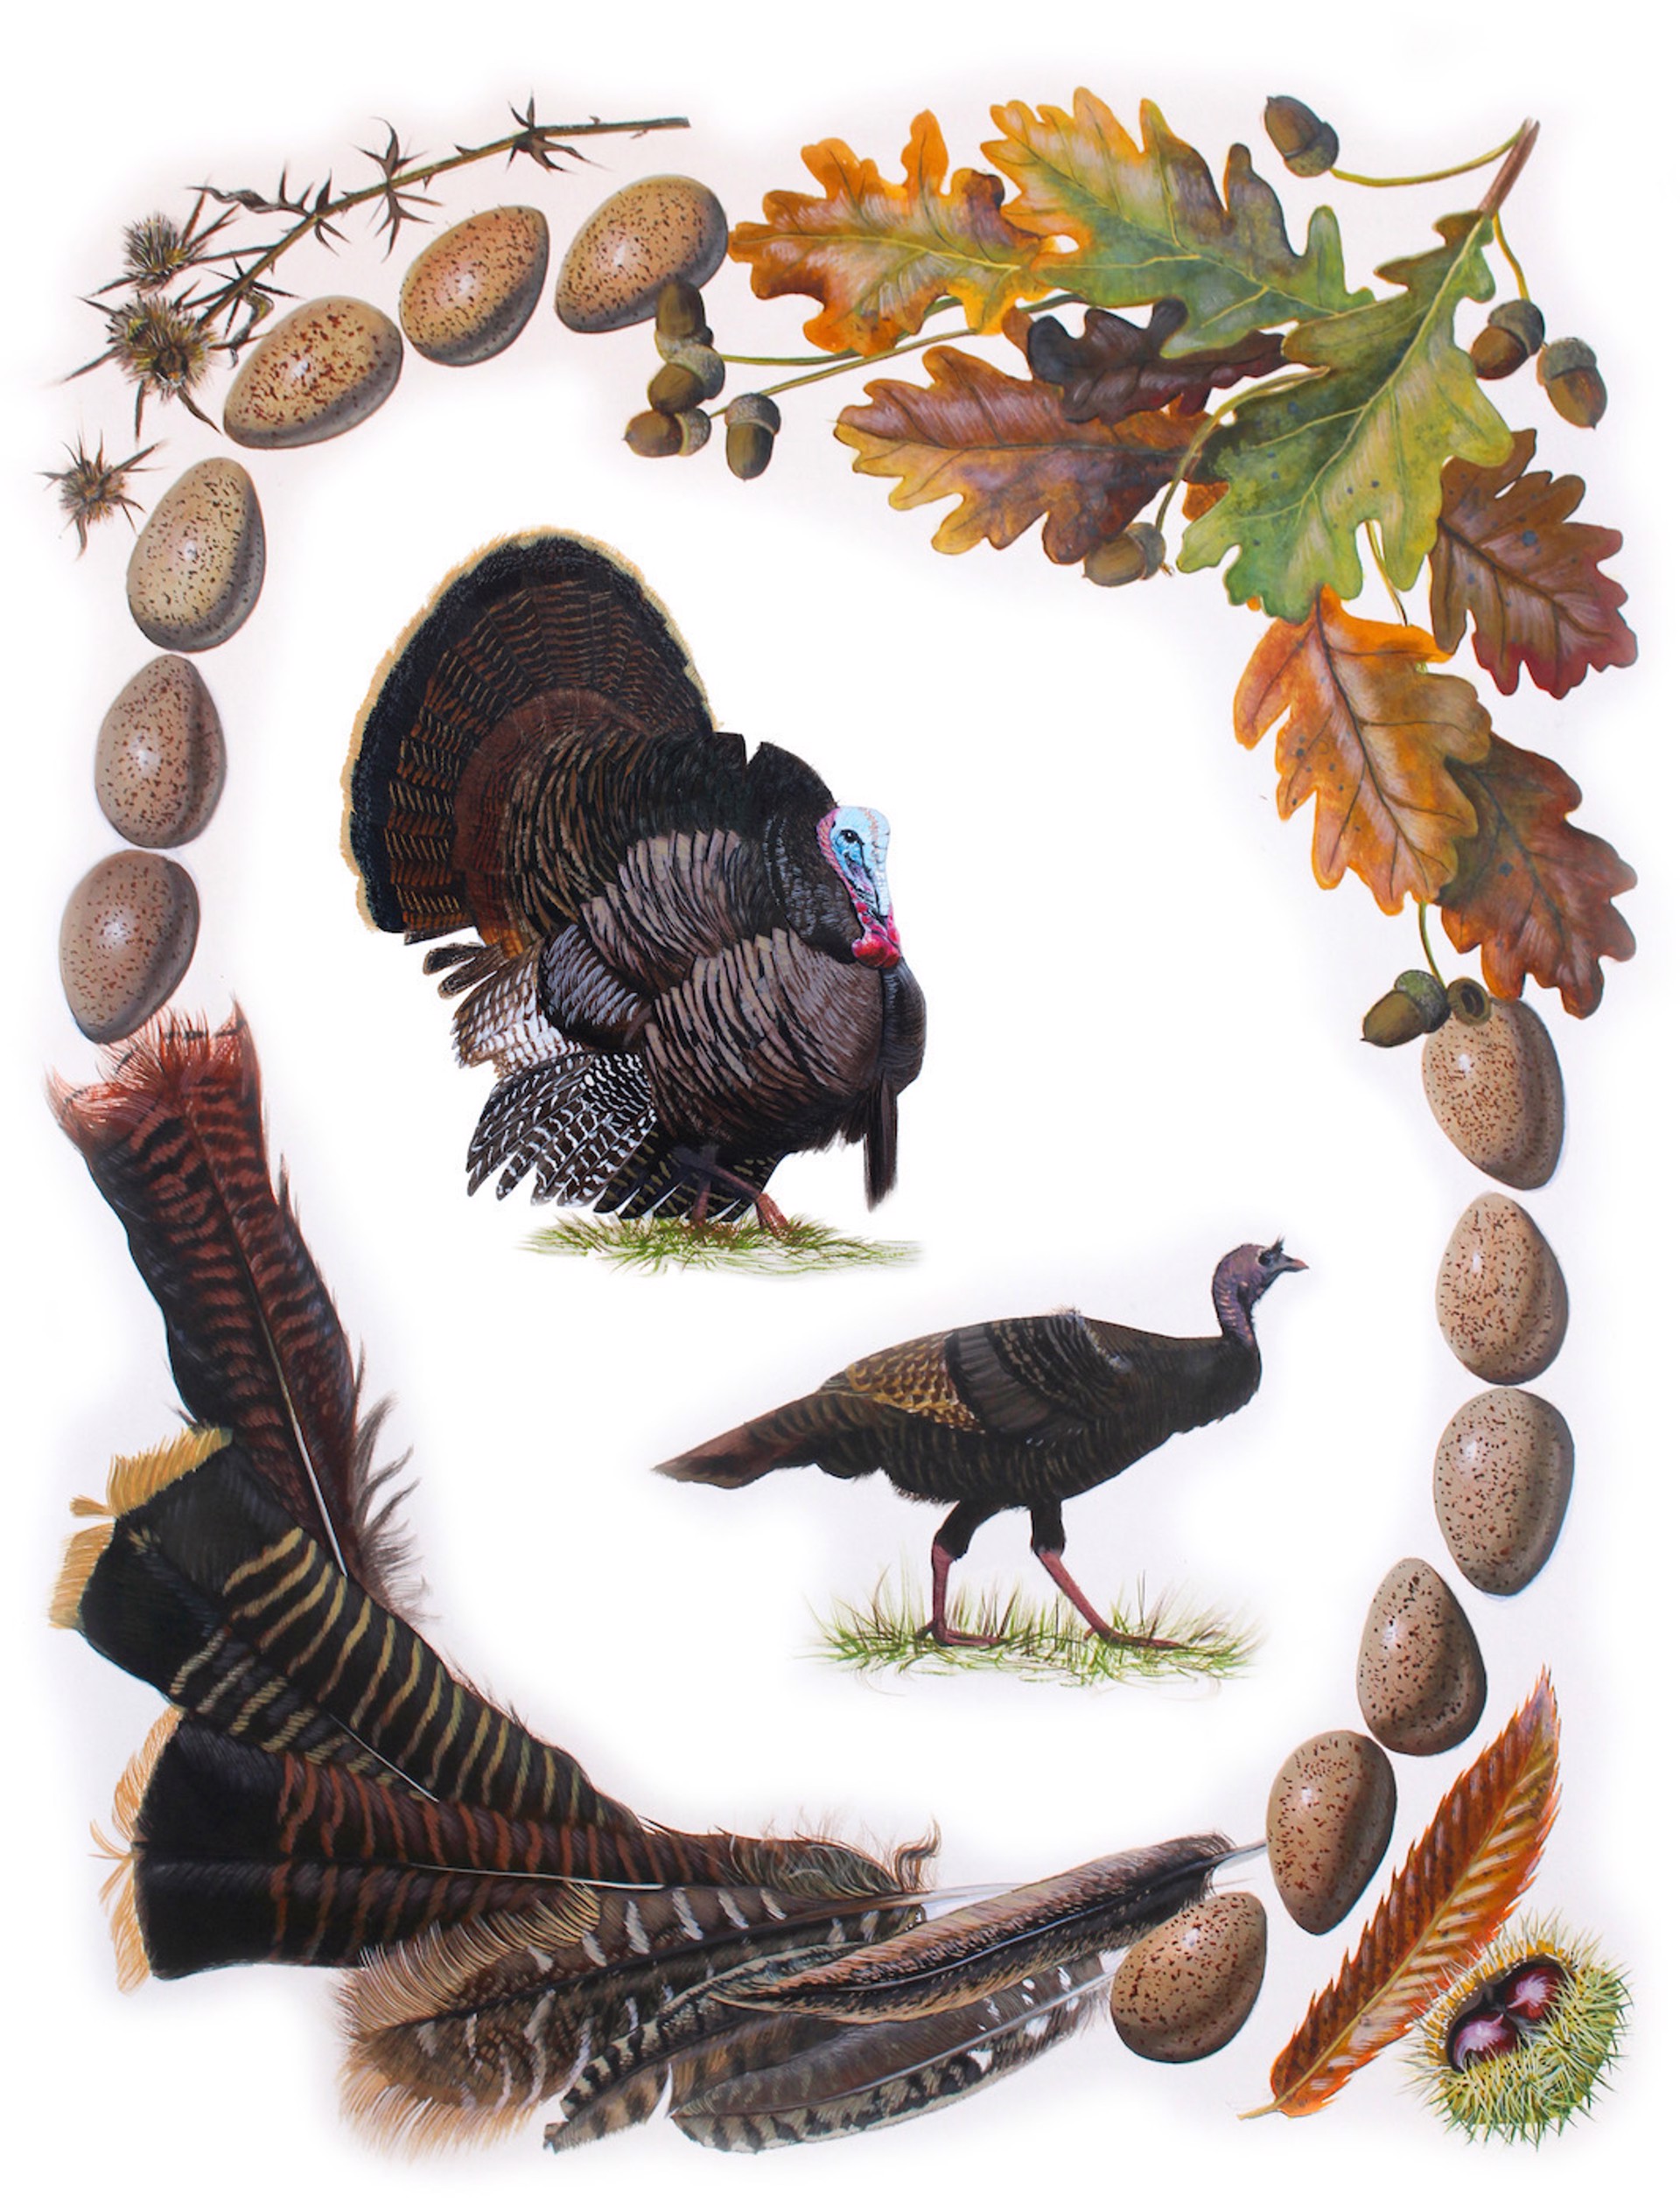 Birds of Shakespeare: Wild Turkey (Meleagris gallopavo) by Missy Dunaway